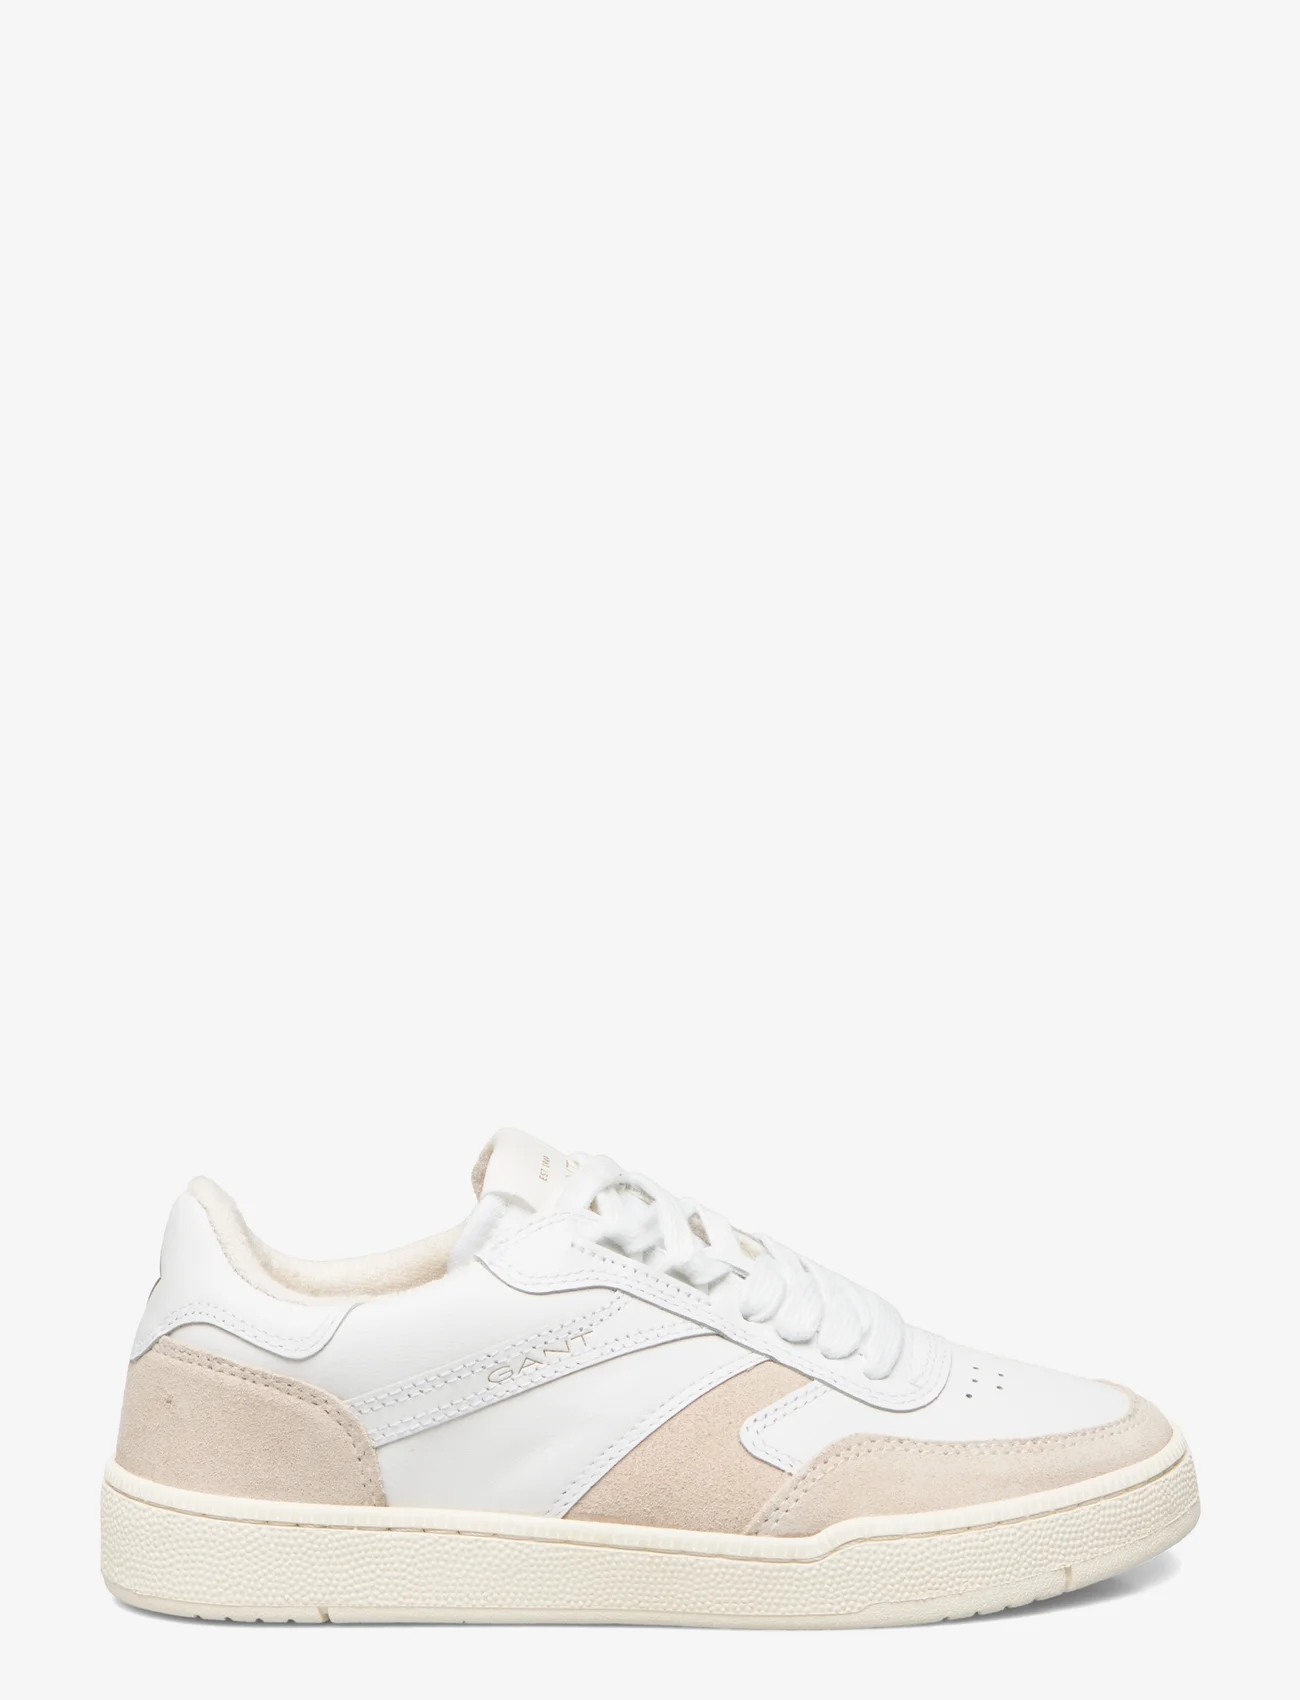 GANT - Evoony Sneaker - white/beige - 1